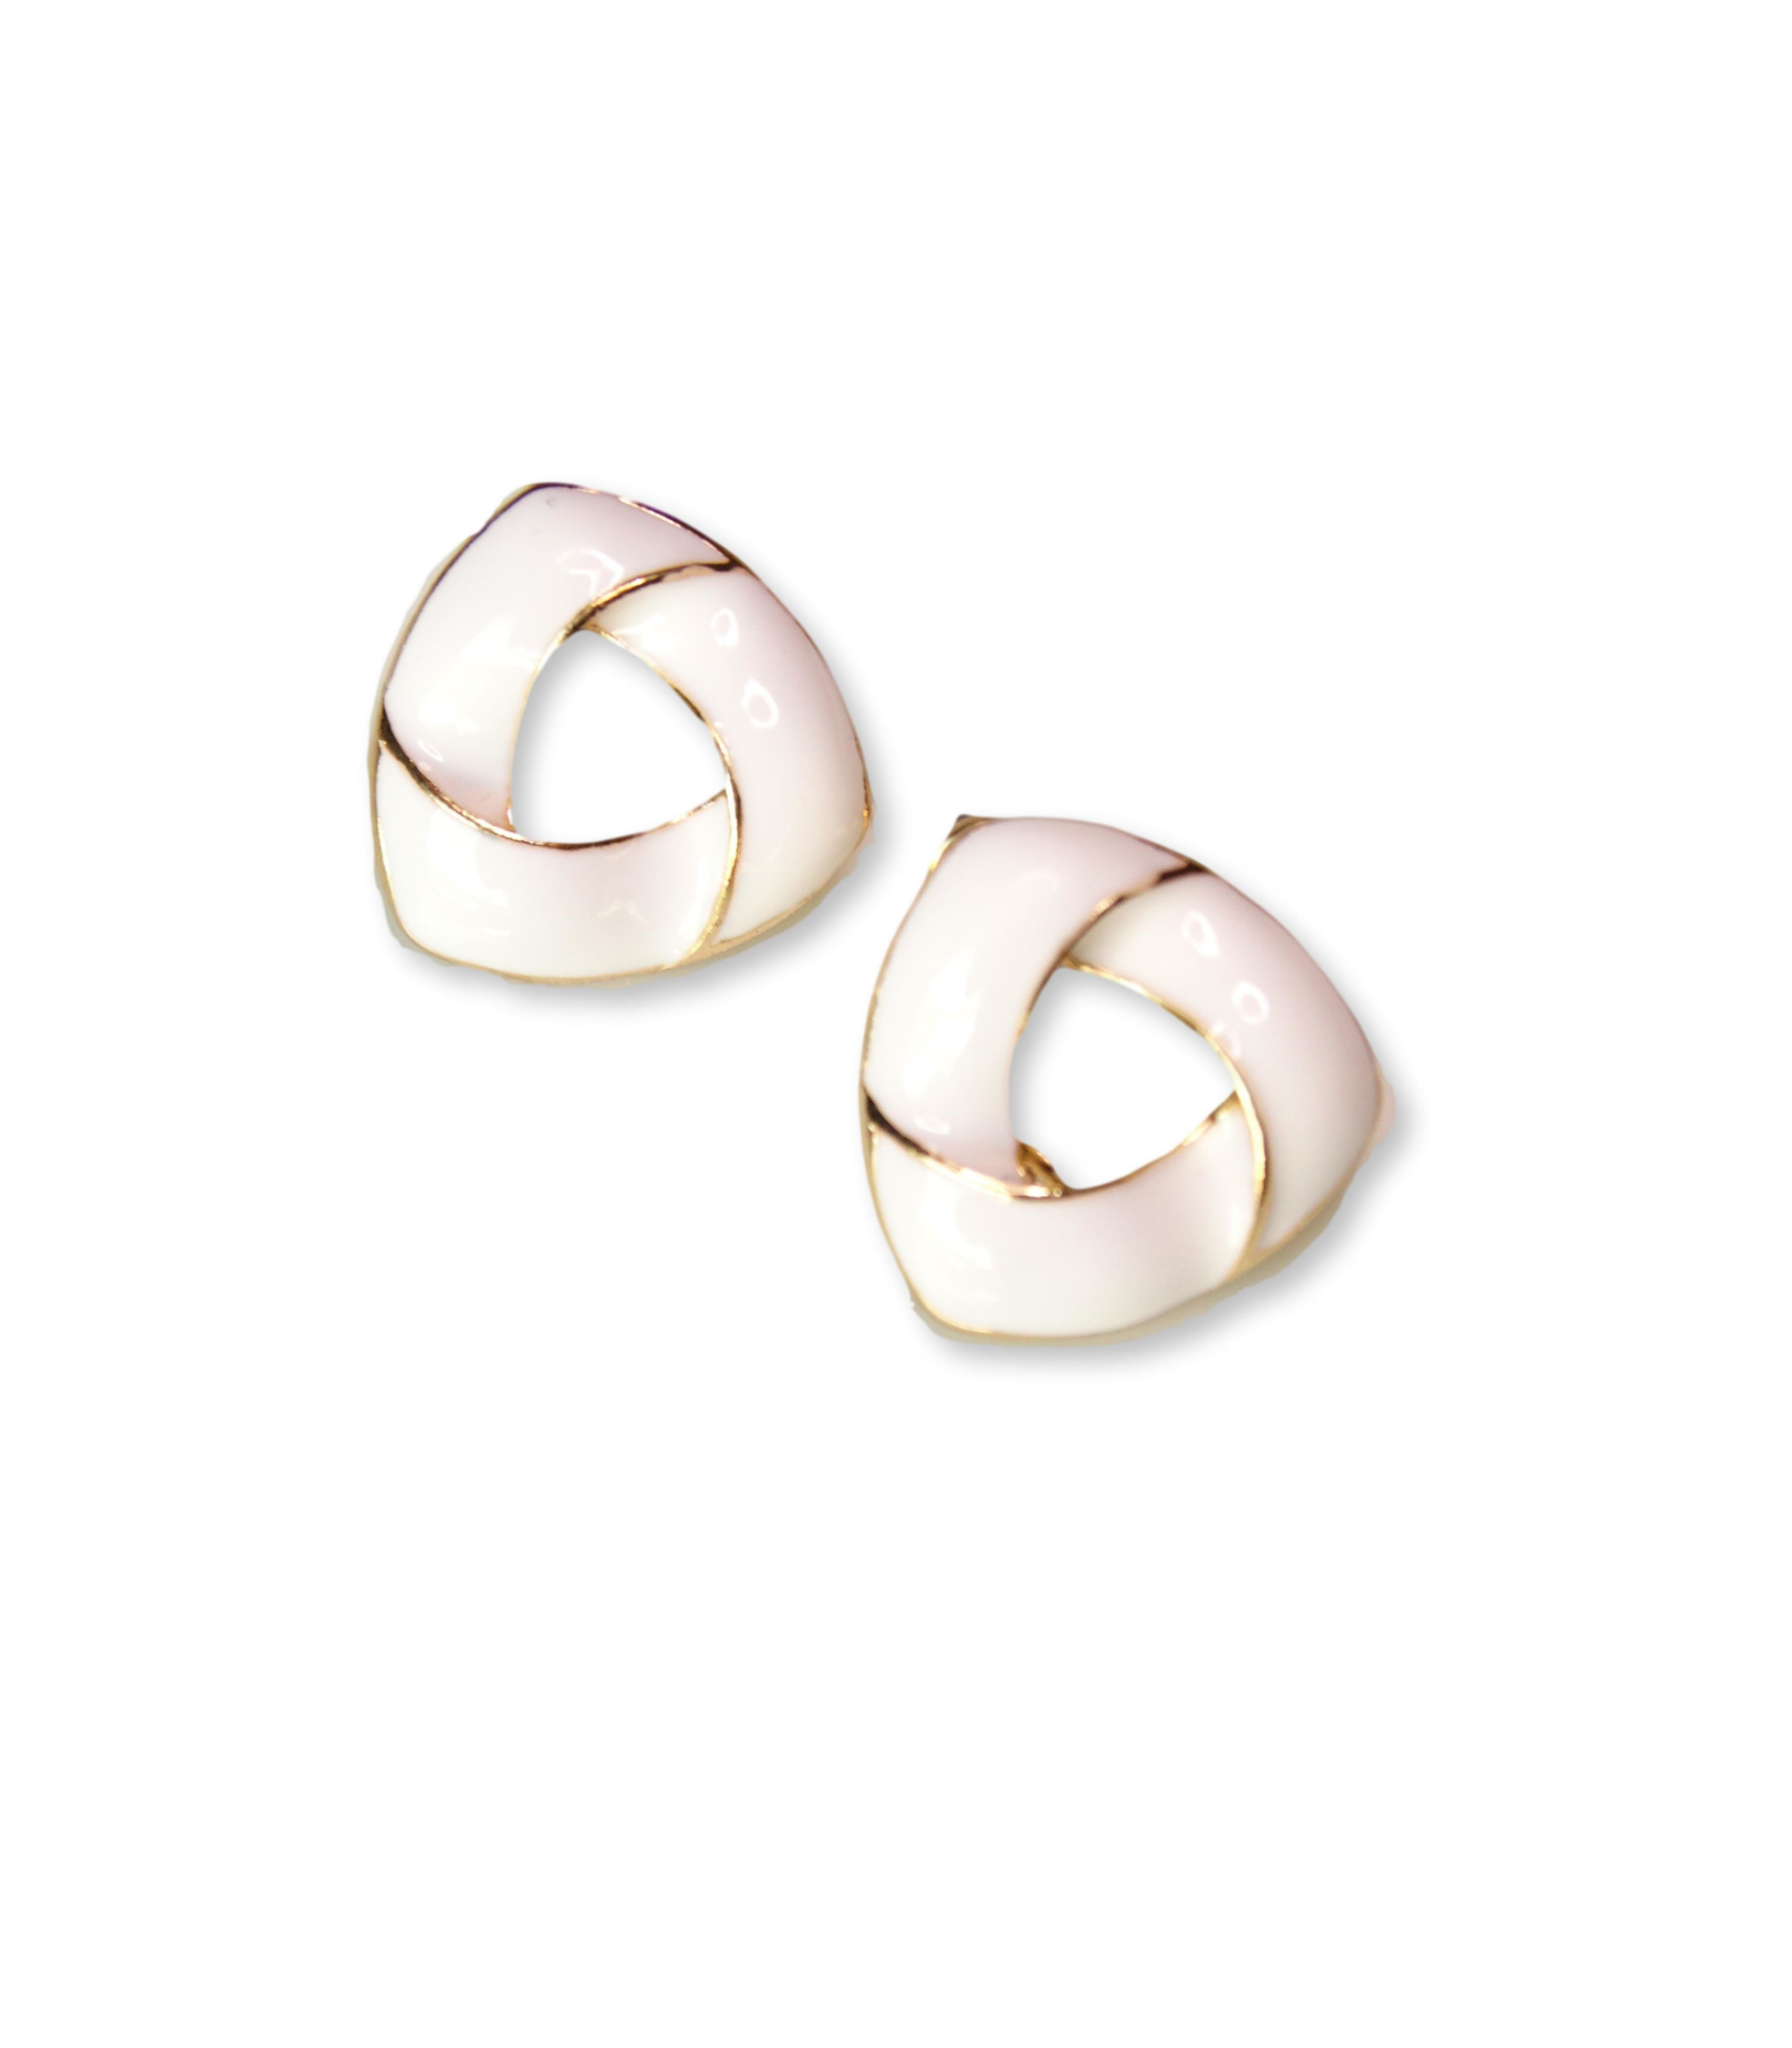 Bermuda Triangle stud earrings